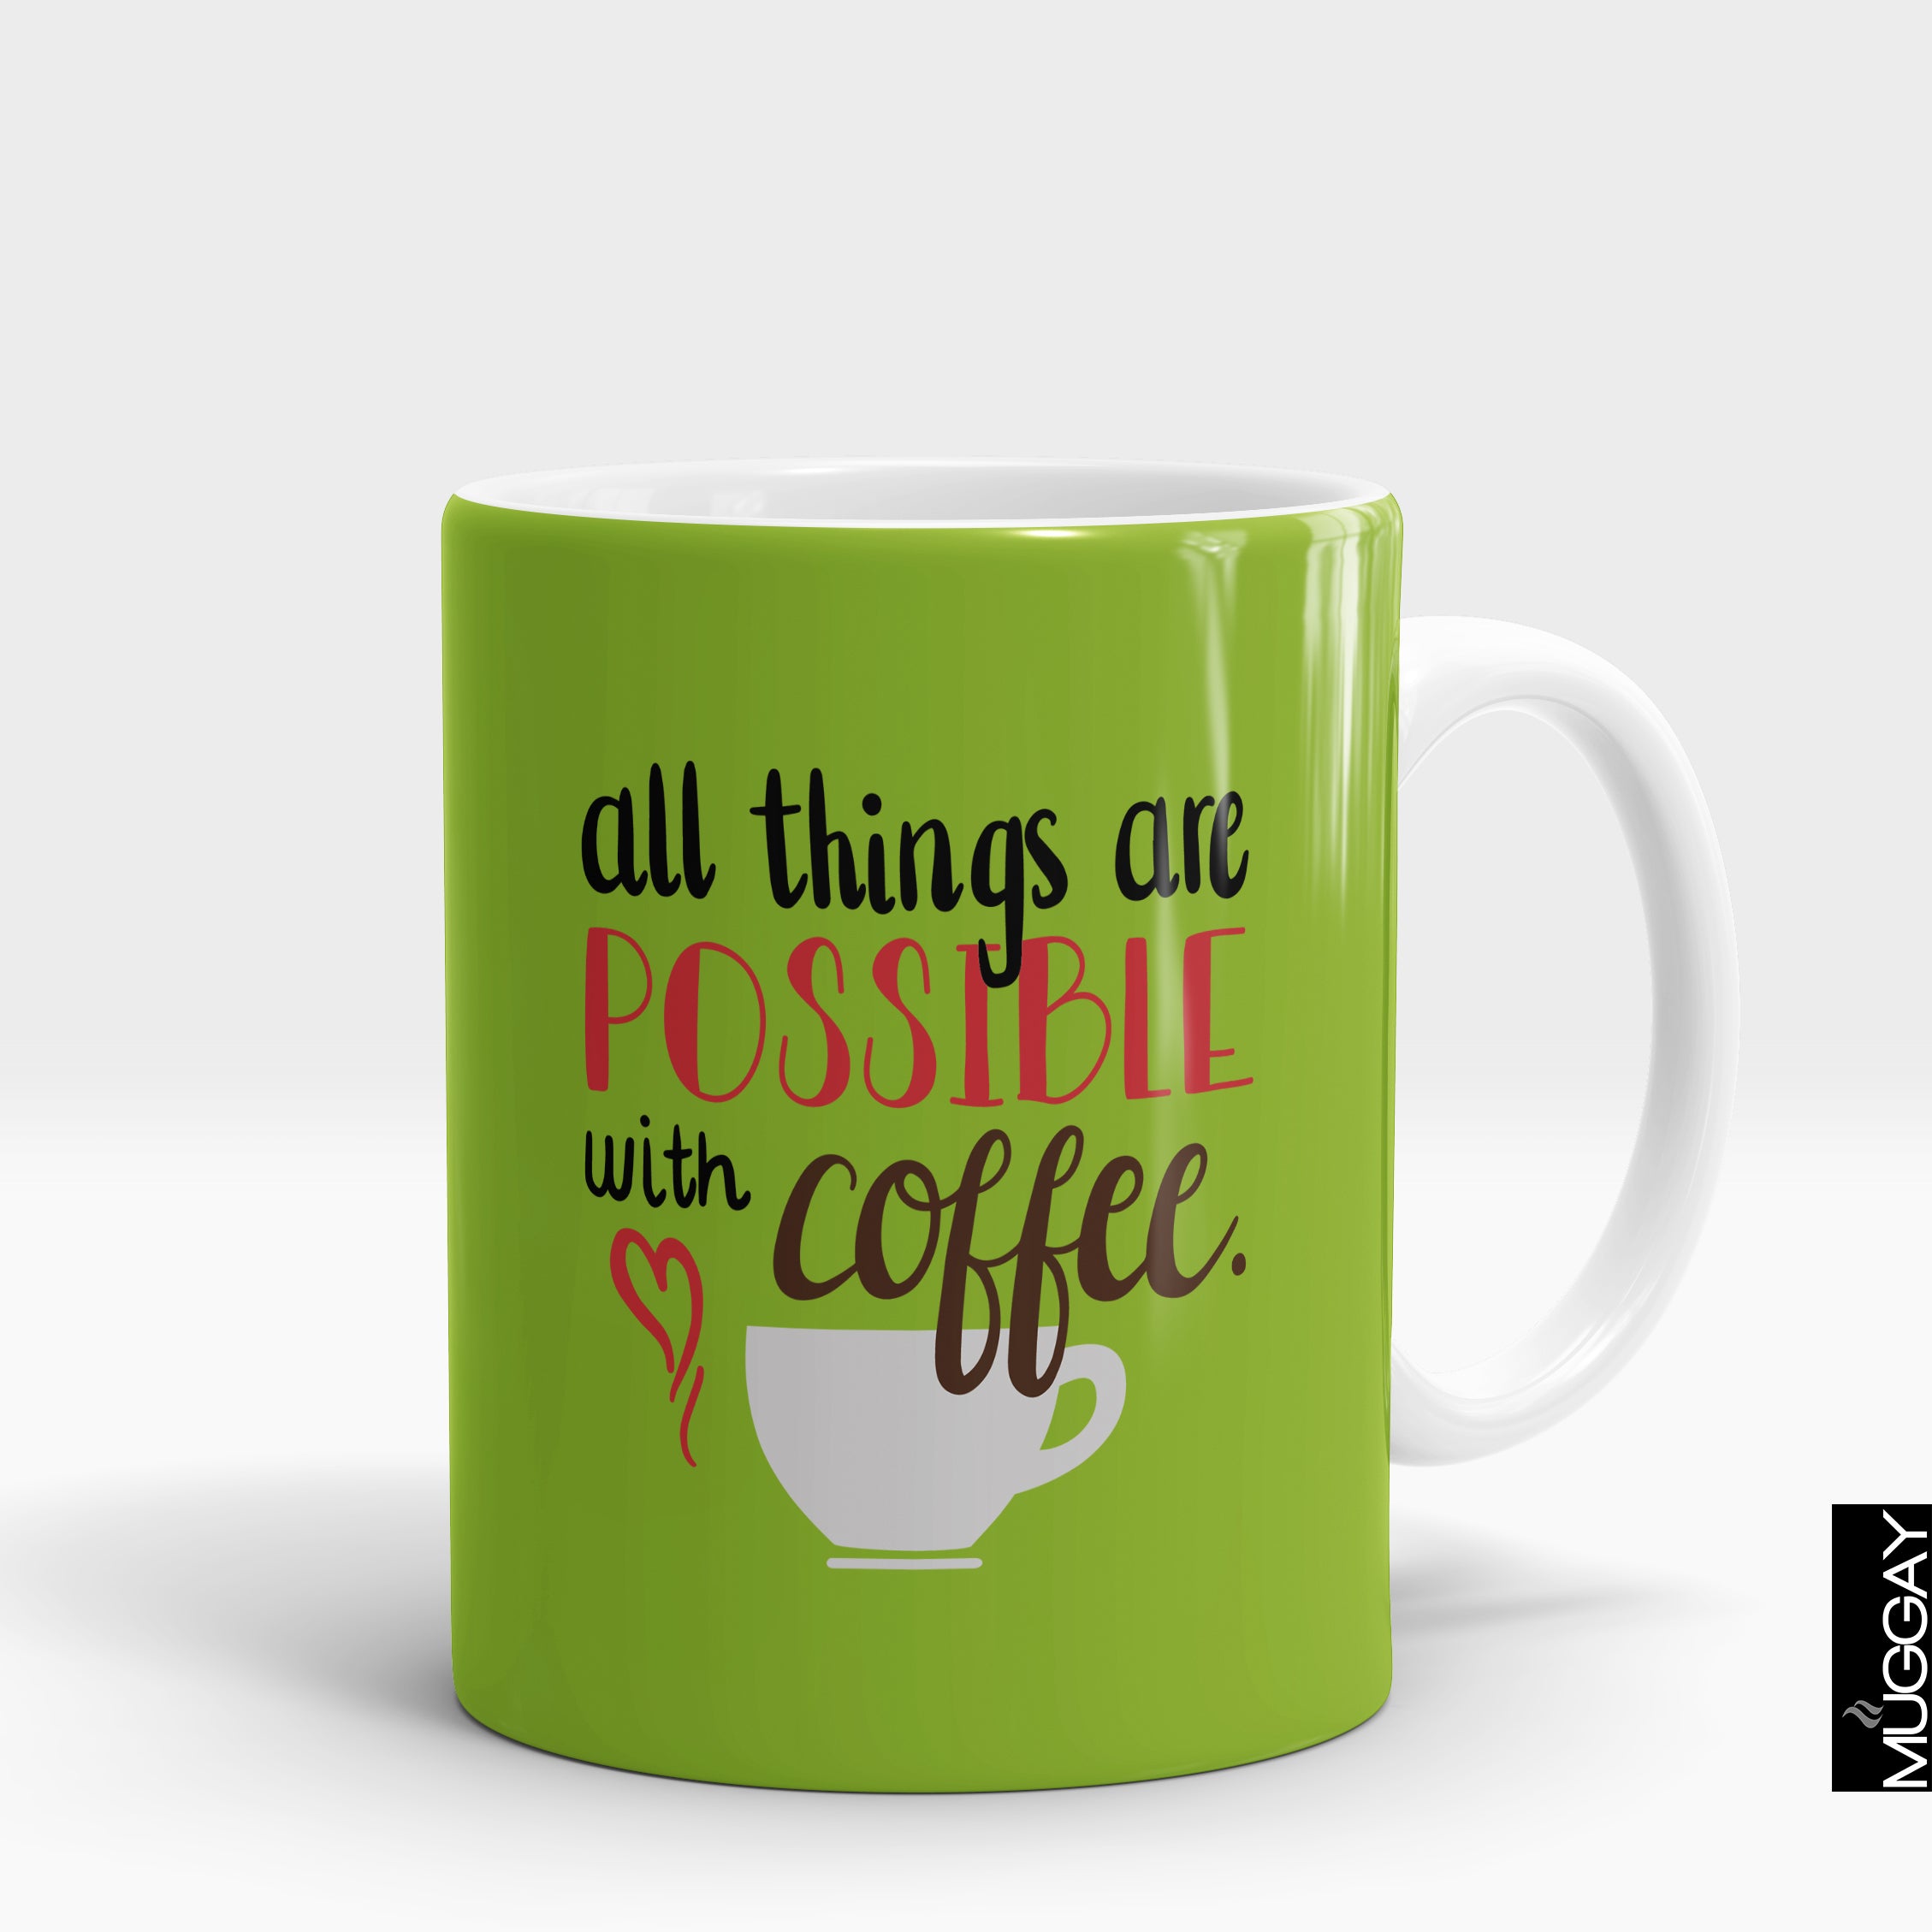 All Things Are Possible With Coffee Mug - Muggay.com - Mugs - Printing shop - truck Art mugs - Mug printing - Customized printing - Digital printing - Muggay 